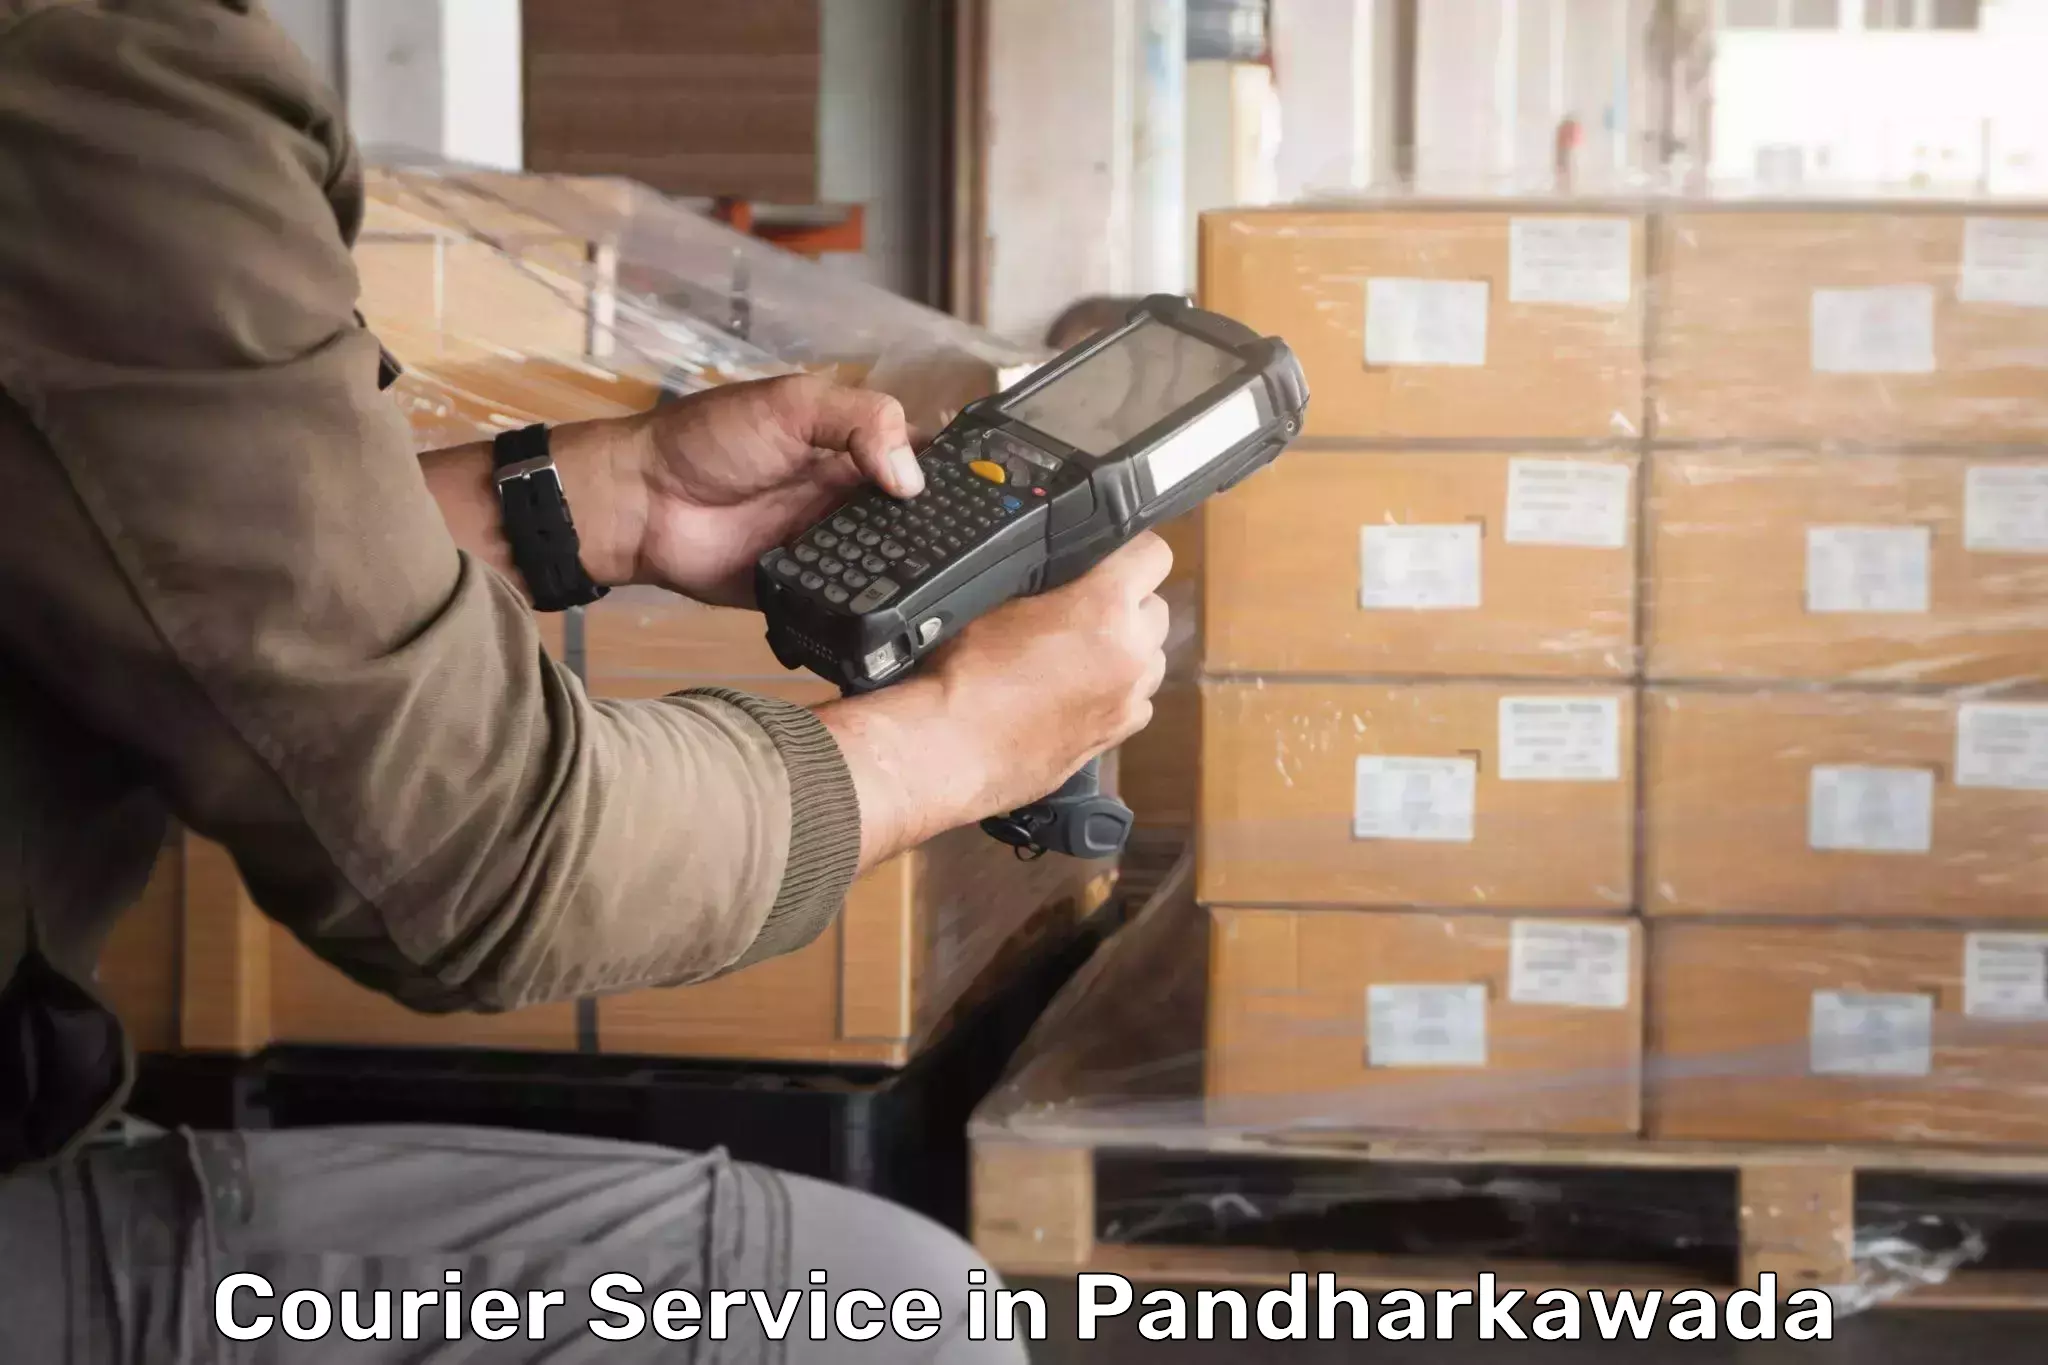 High value parcel delivery in Pandharkawada